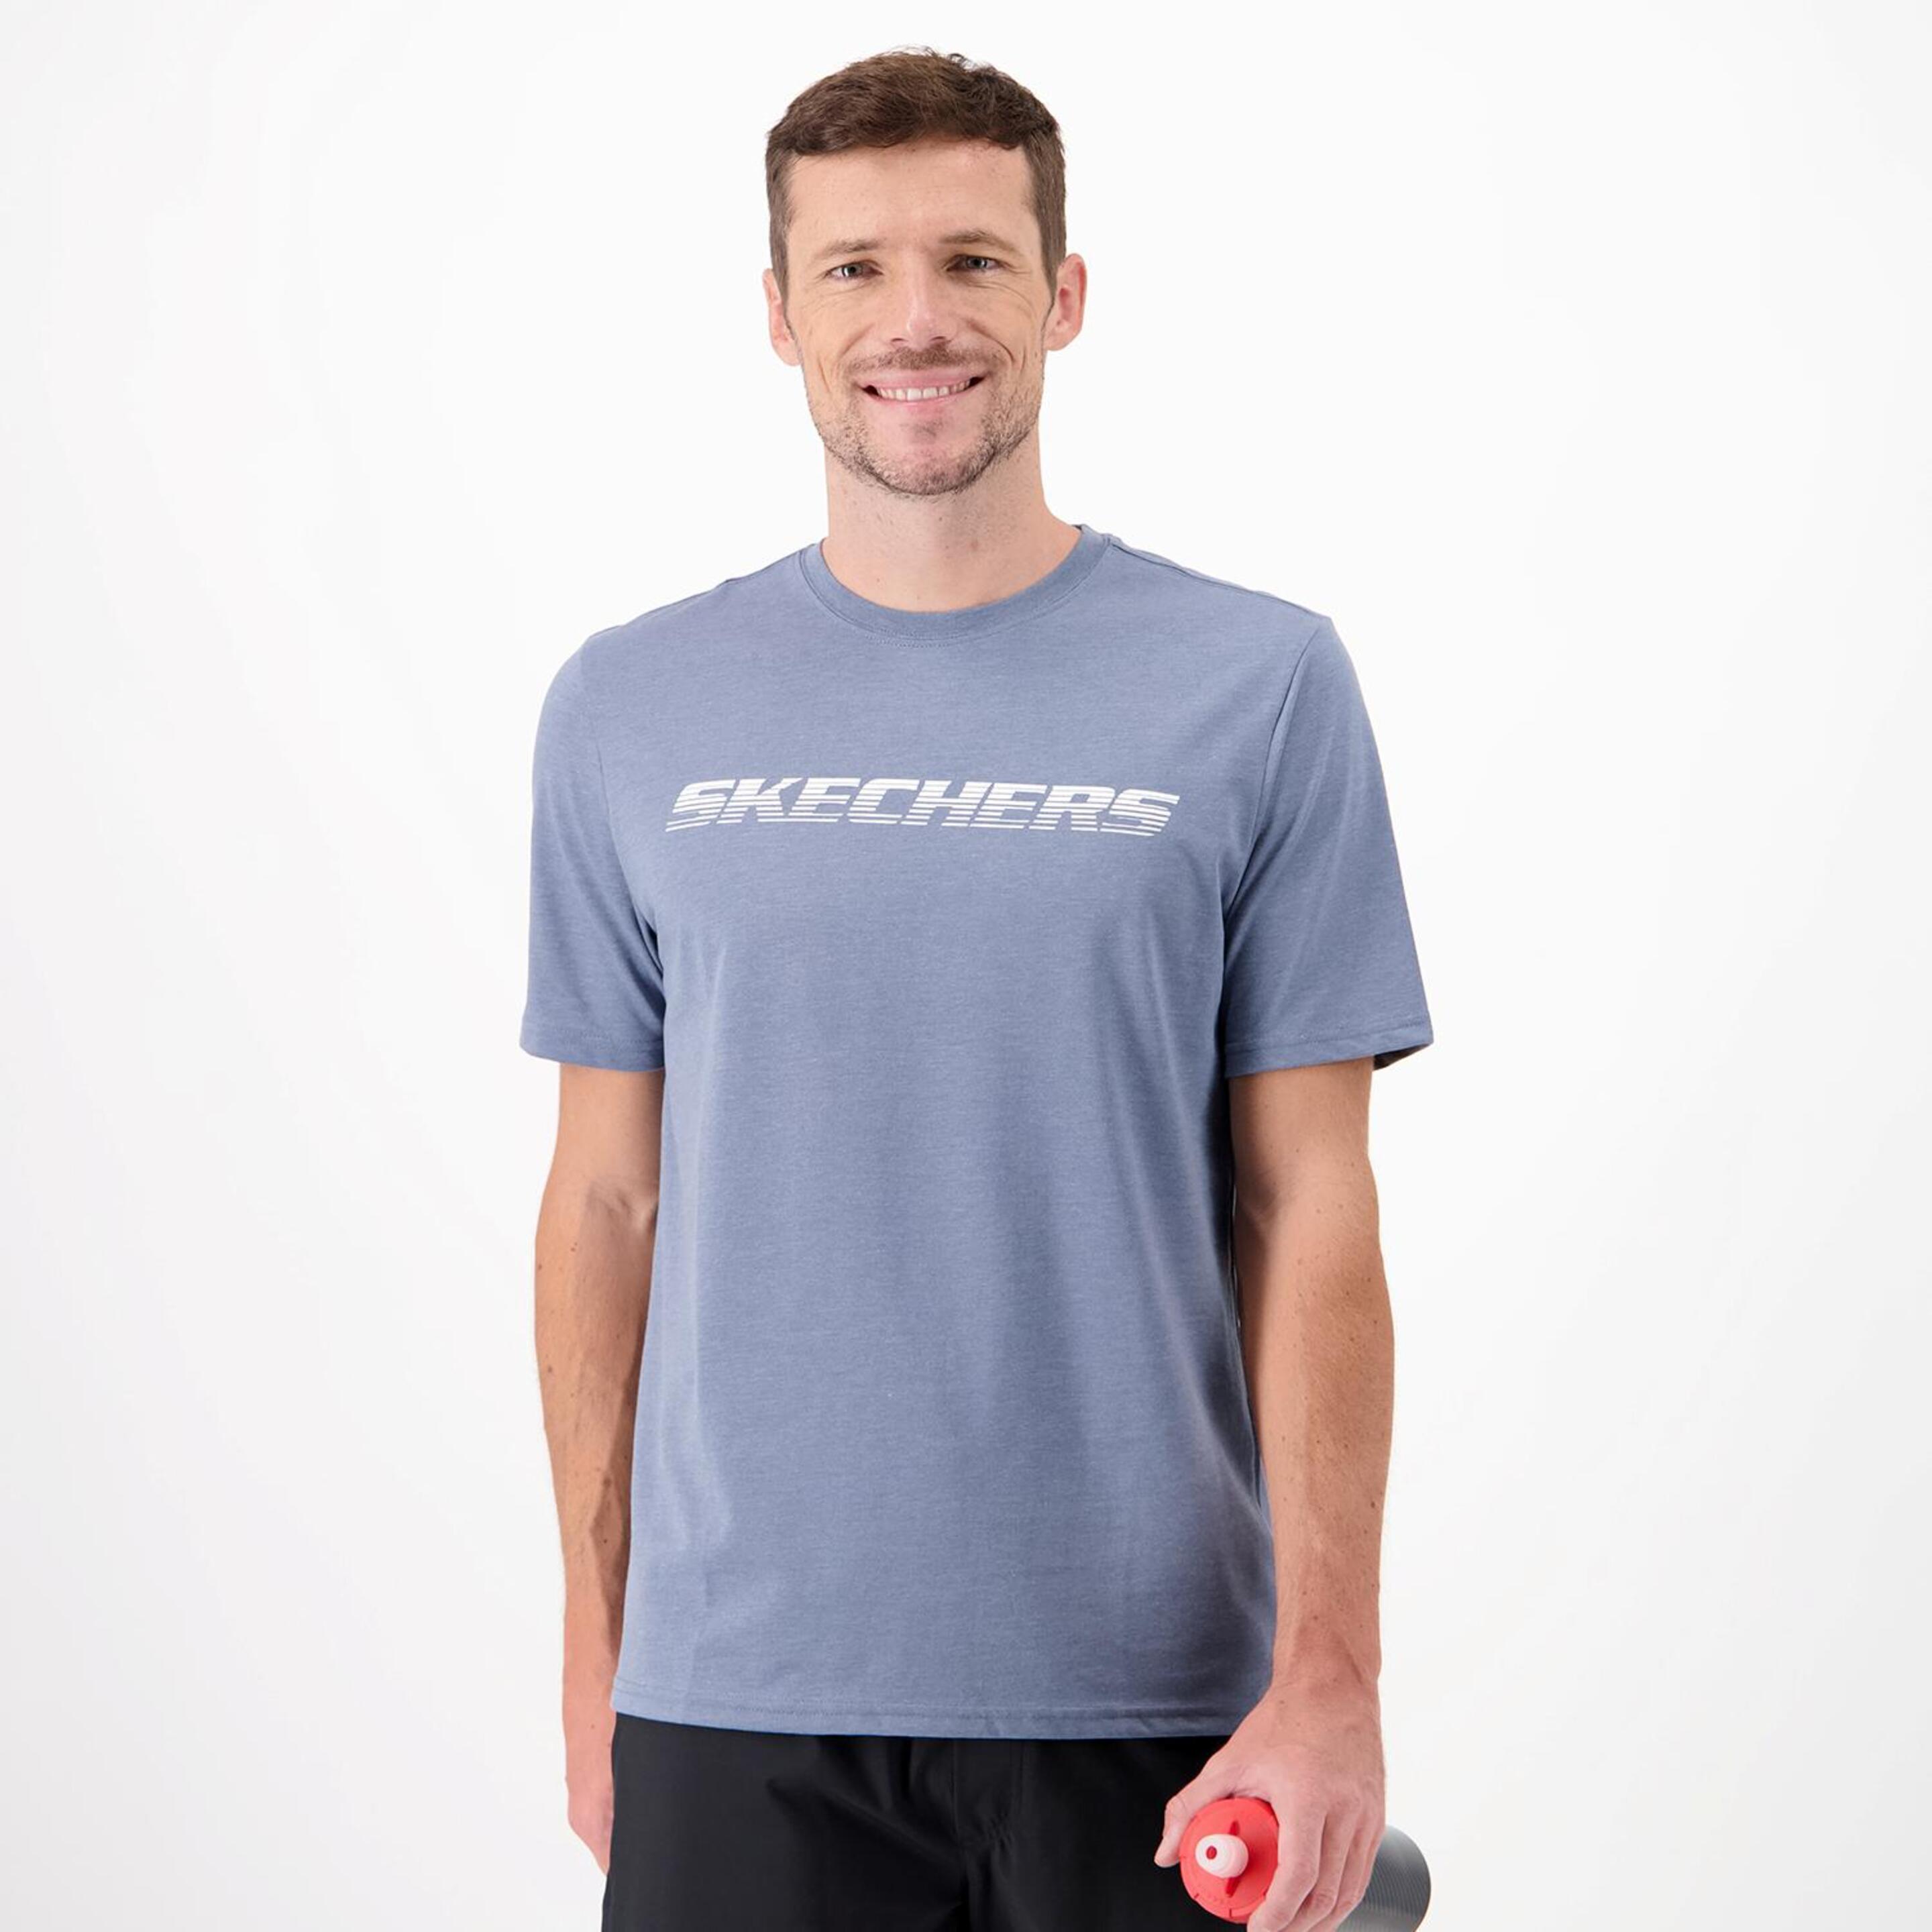 Skechers Motion - azul - Camiseta Hombre